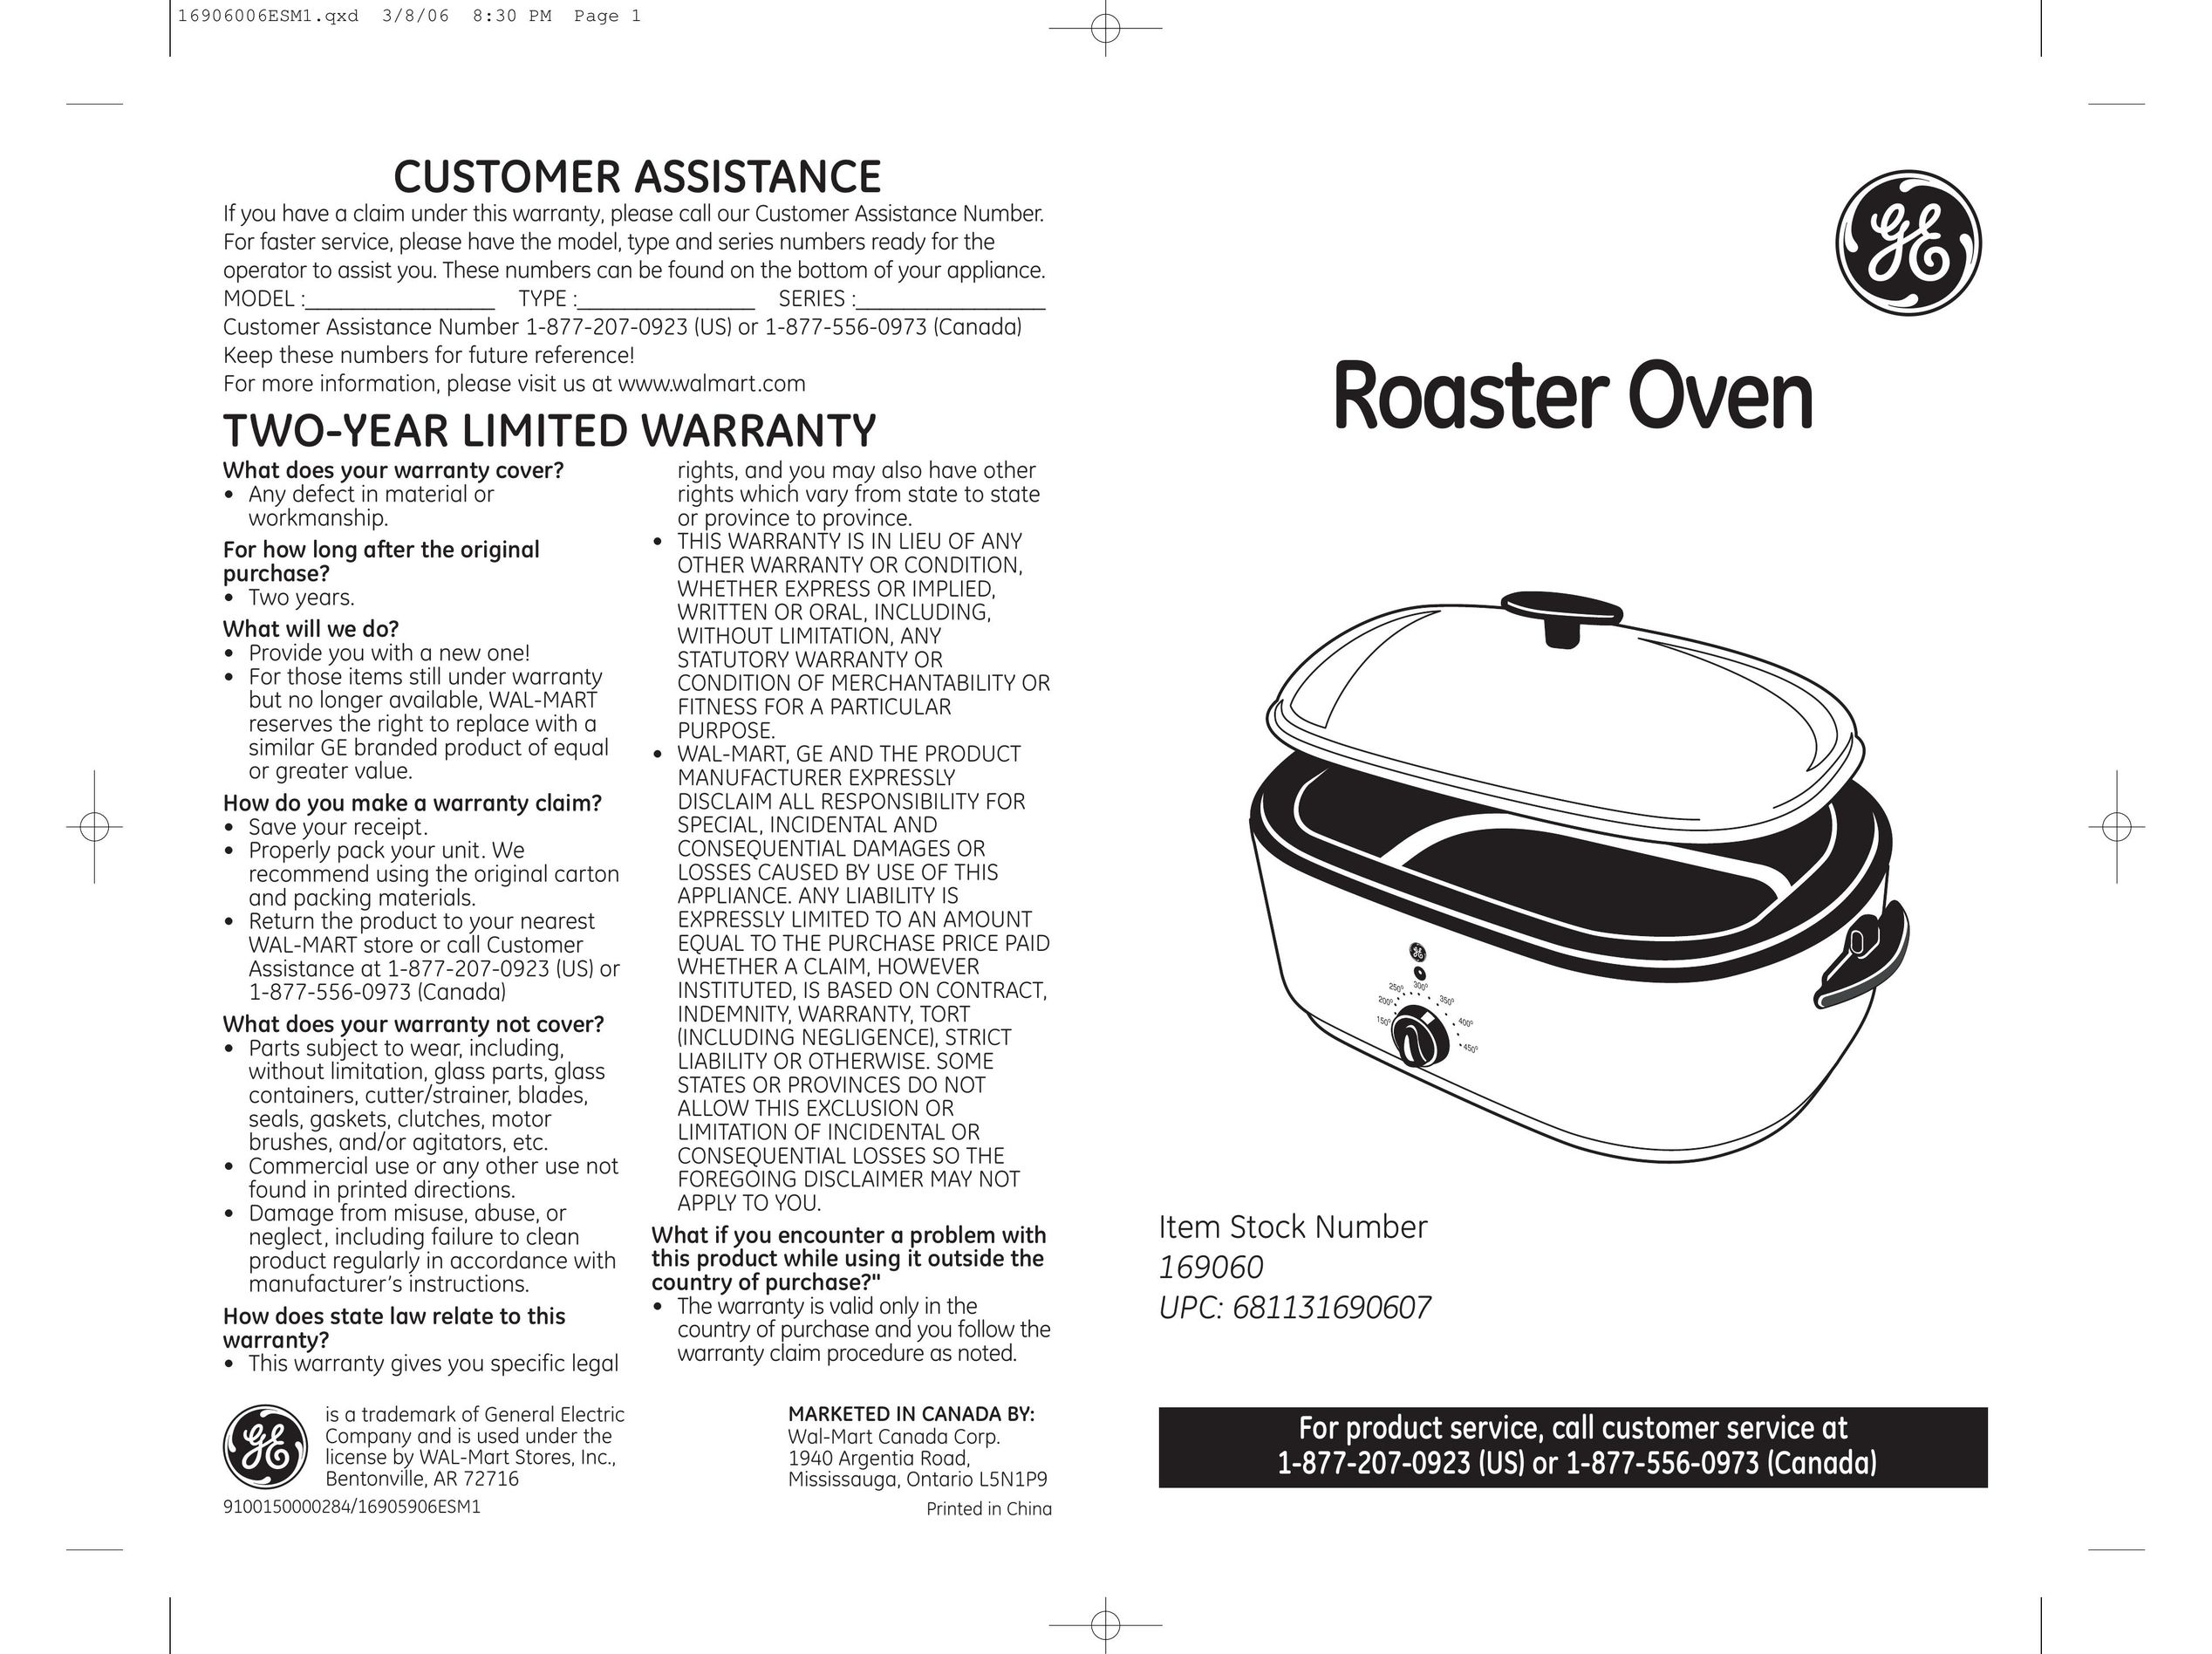 GE 681131690607 Oven User Manual